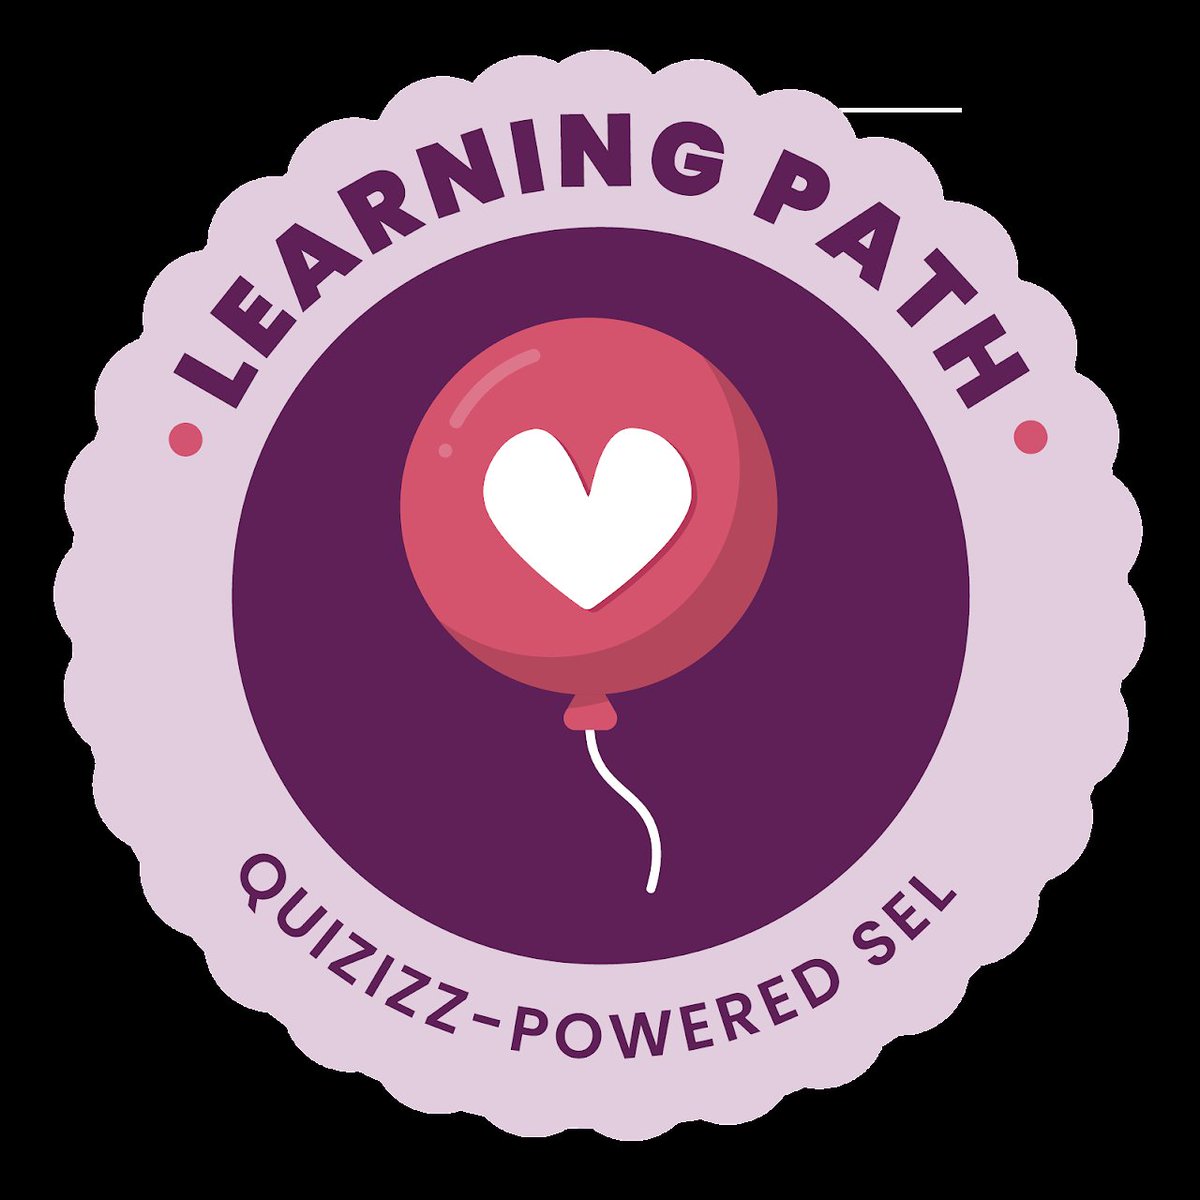 🏆 '#Quizizz-Powered SEL' #LearningPath 💪🏽
Thank you Quizizz!! 💜
#edtech #elementary #miee
#يوميات_معلم_مغربي